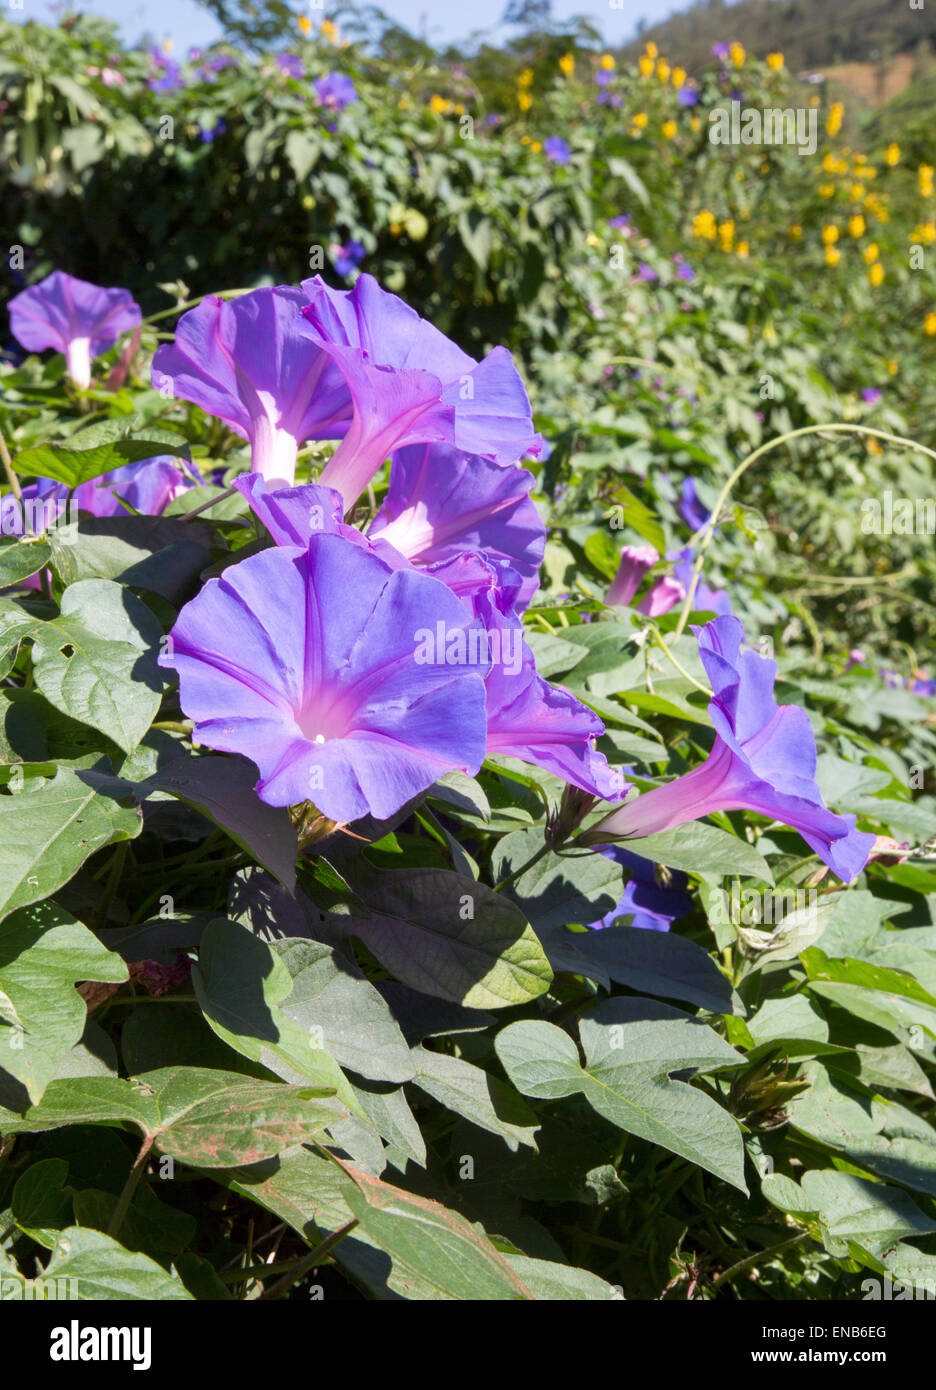 Morning Glory Convolvulaceae plantar flores púrpuras, el altiplano de Sri Lanka, Asia Foto de stock